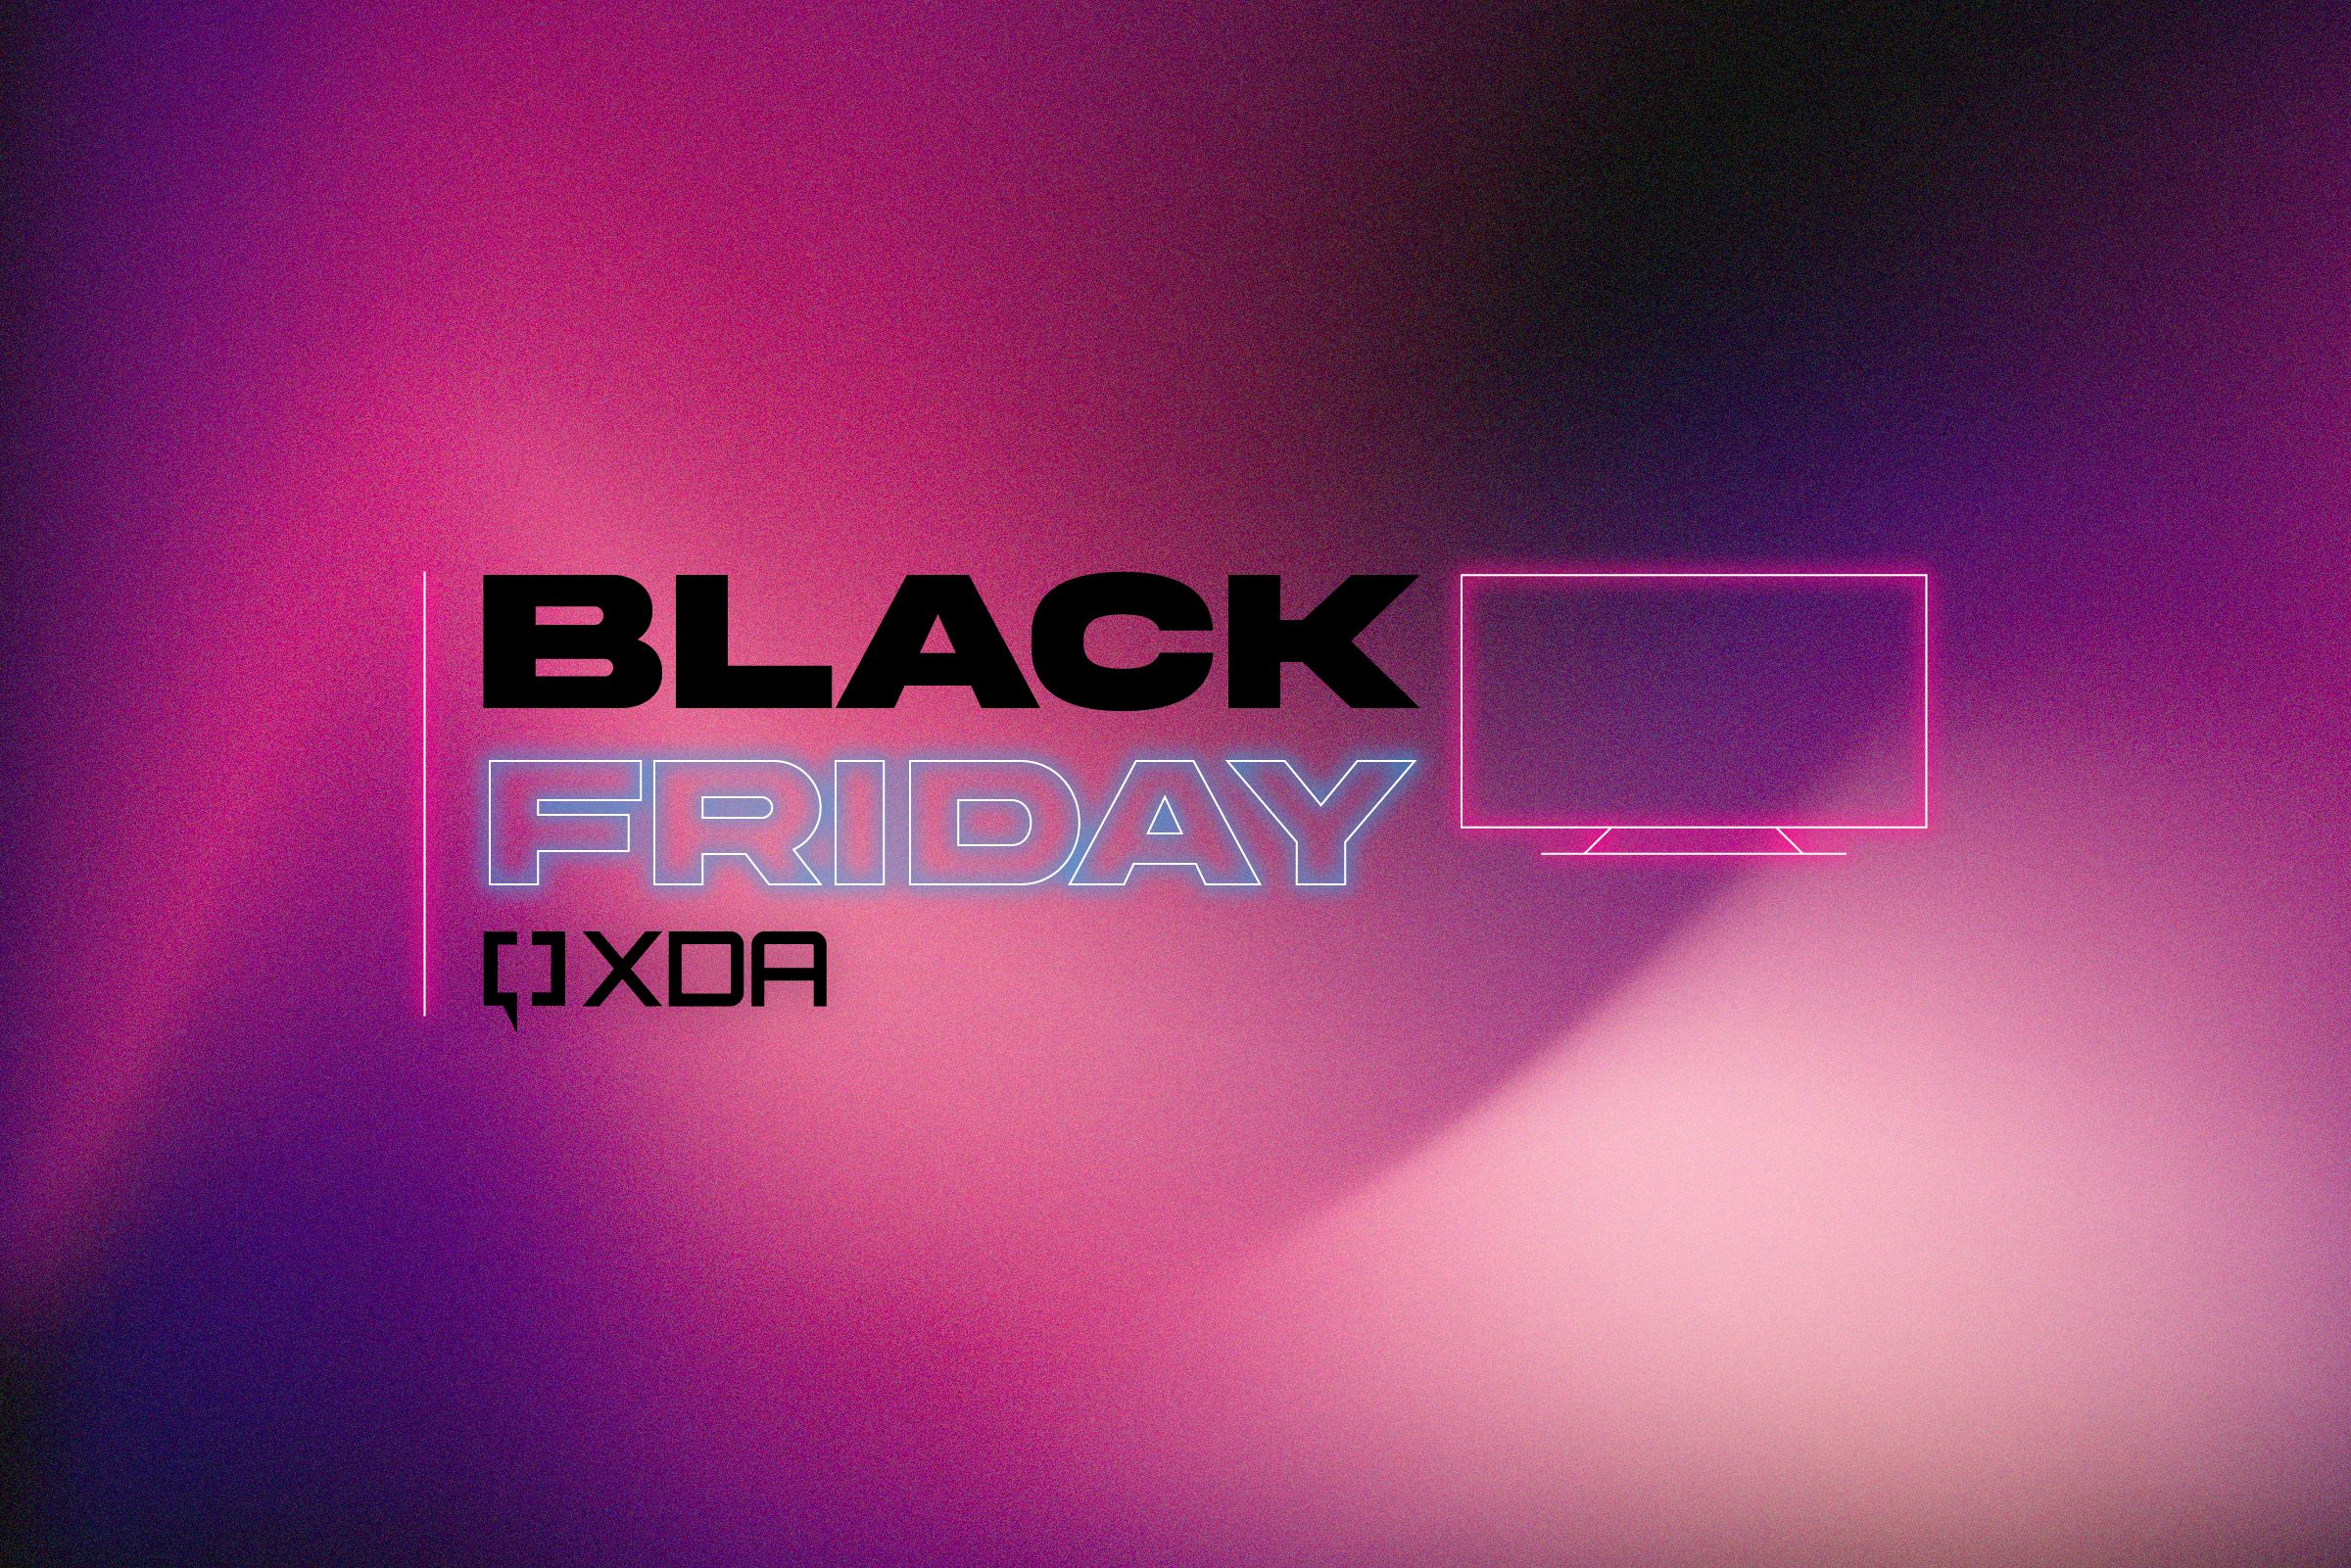 Best Black Friday TV deals- Save big on Samsung, LG, Sony